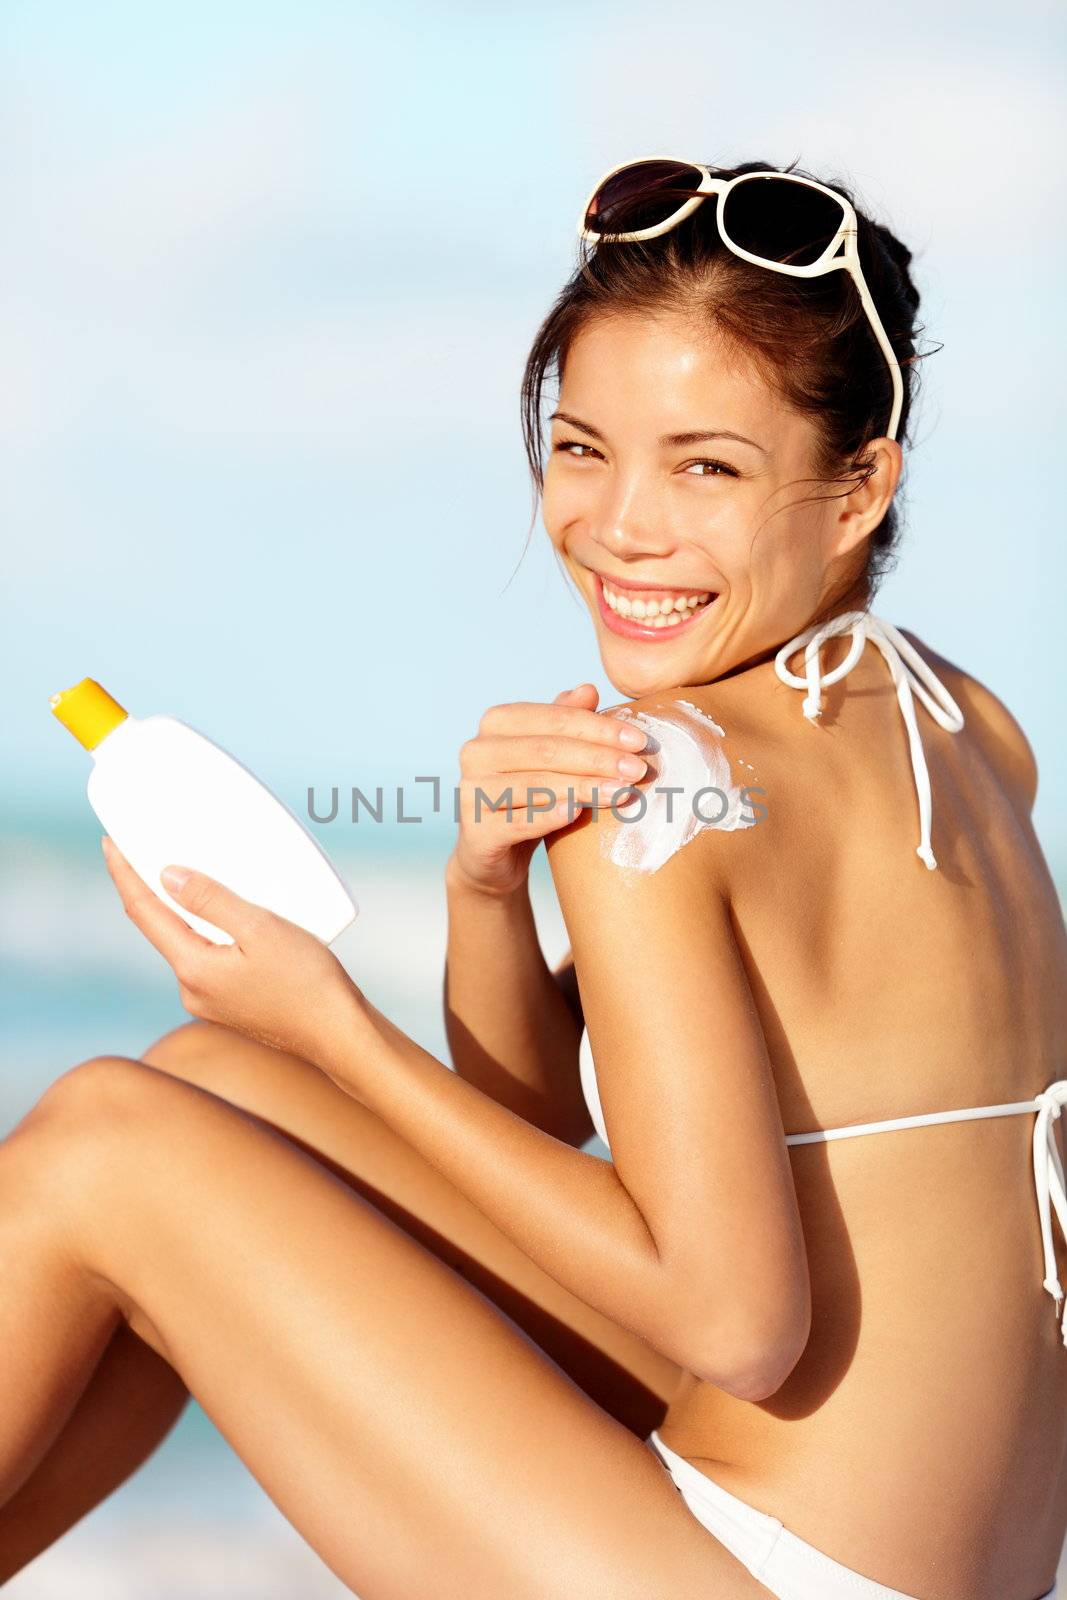 Sunscreen woman. Girl putting sun block lotion on sunny beach holding white sun tan lotion bottle. Beautiful young woman enjoying sunshine on sunny summer day during vacation. Mixed race Asian Chinese / Caucasian female bikini model.